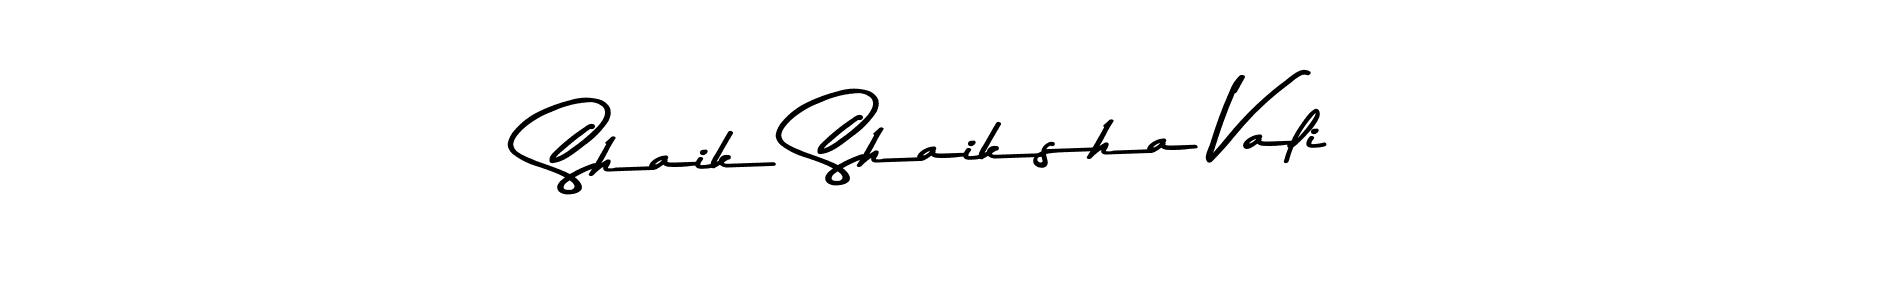 How to Draw Shaik Shaiksha Vali signature style? Asem Kandis PERSONAL USE is a latest design signature styles for name Shaik Shaiksha Vali. Shaik Shaiksha Vali signature style 9 images and pictures png